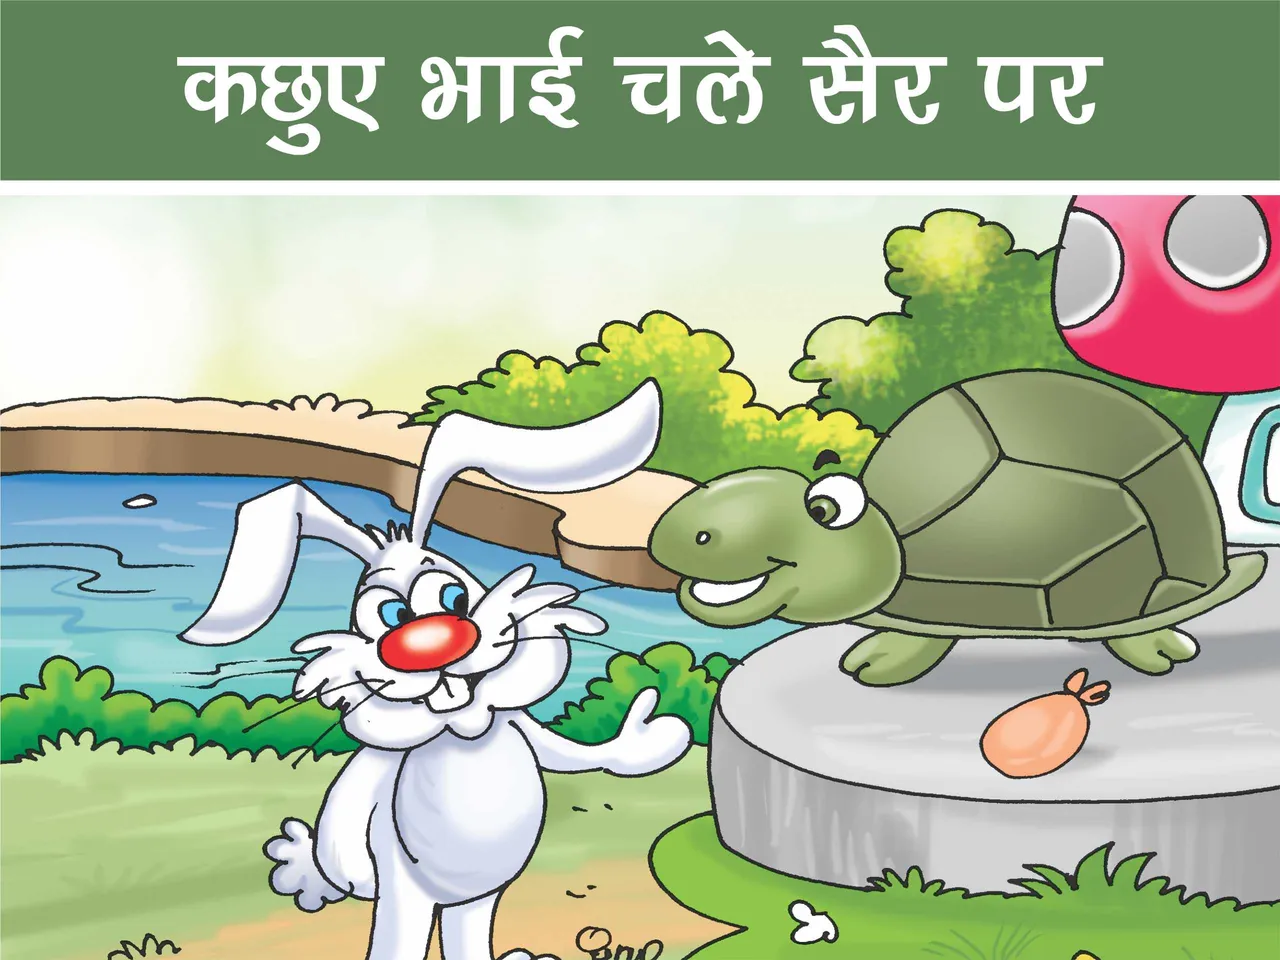 Turtle with rabbit Cartoon image